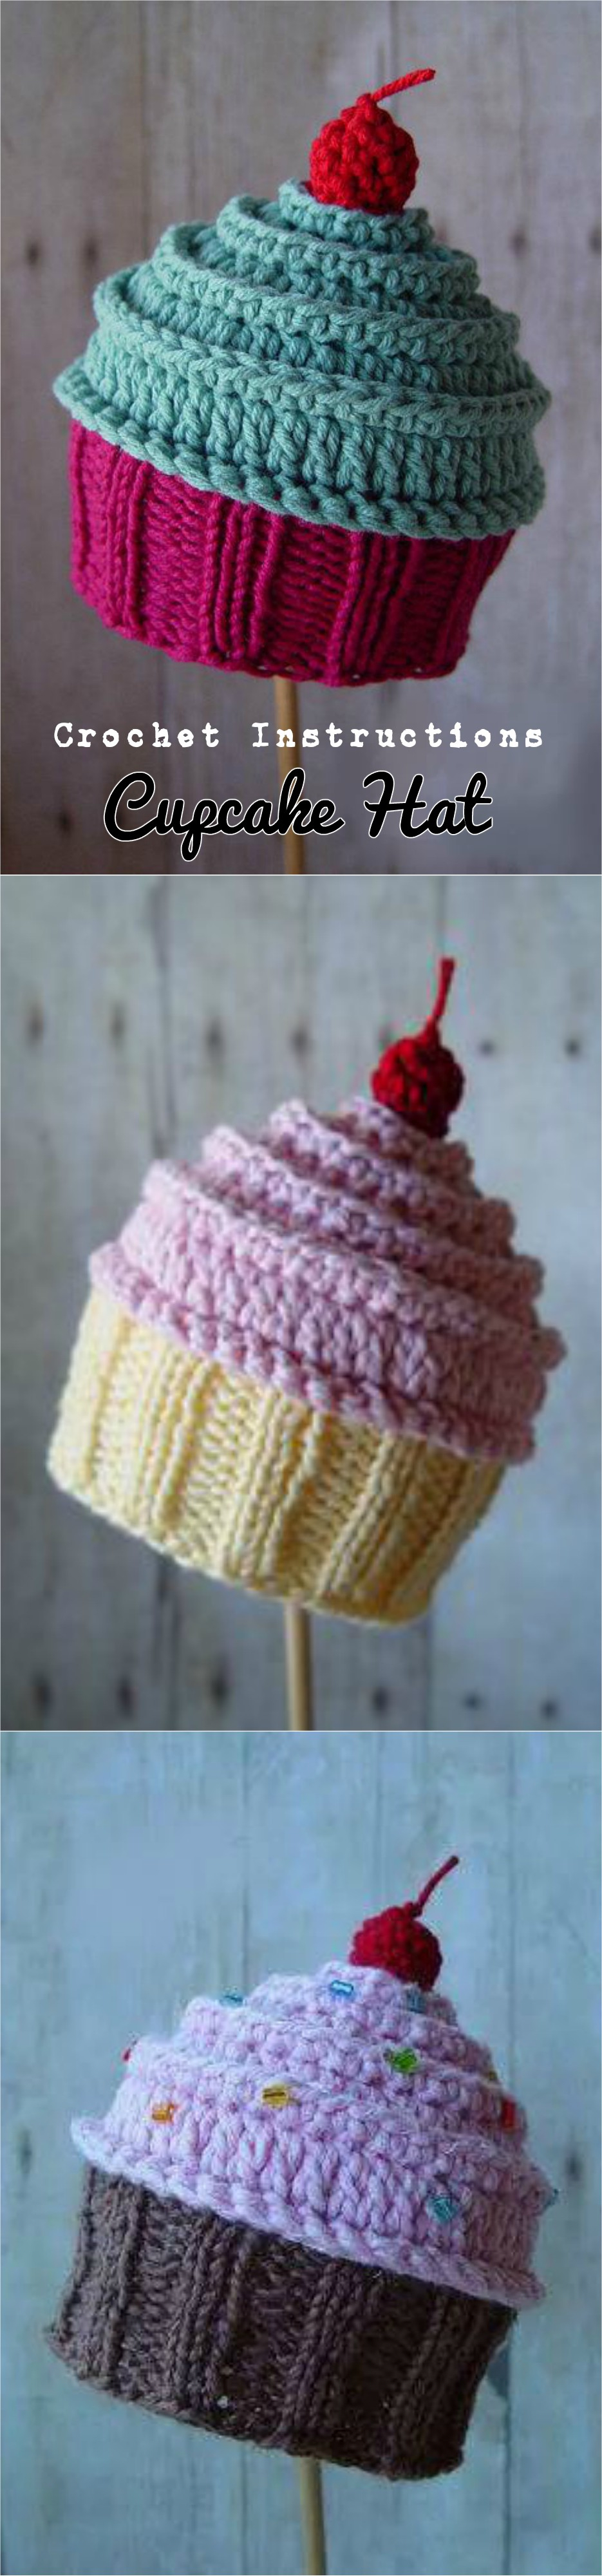 Knitted Cupcake Hat Pattern Crochet Cupcake Hat Pretty Ideas